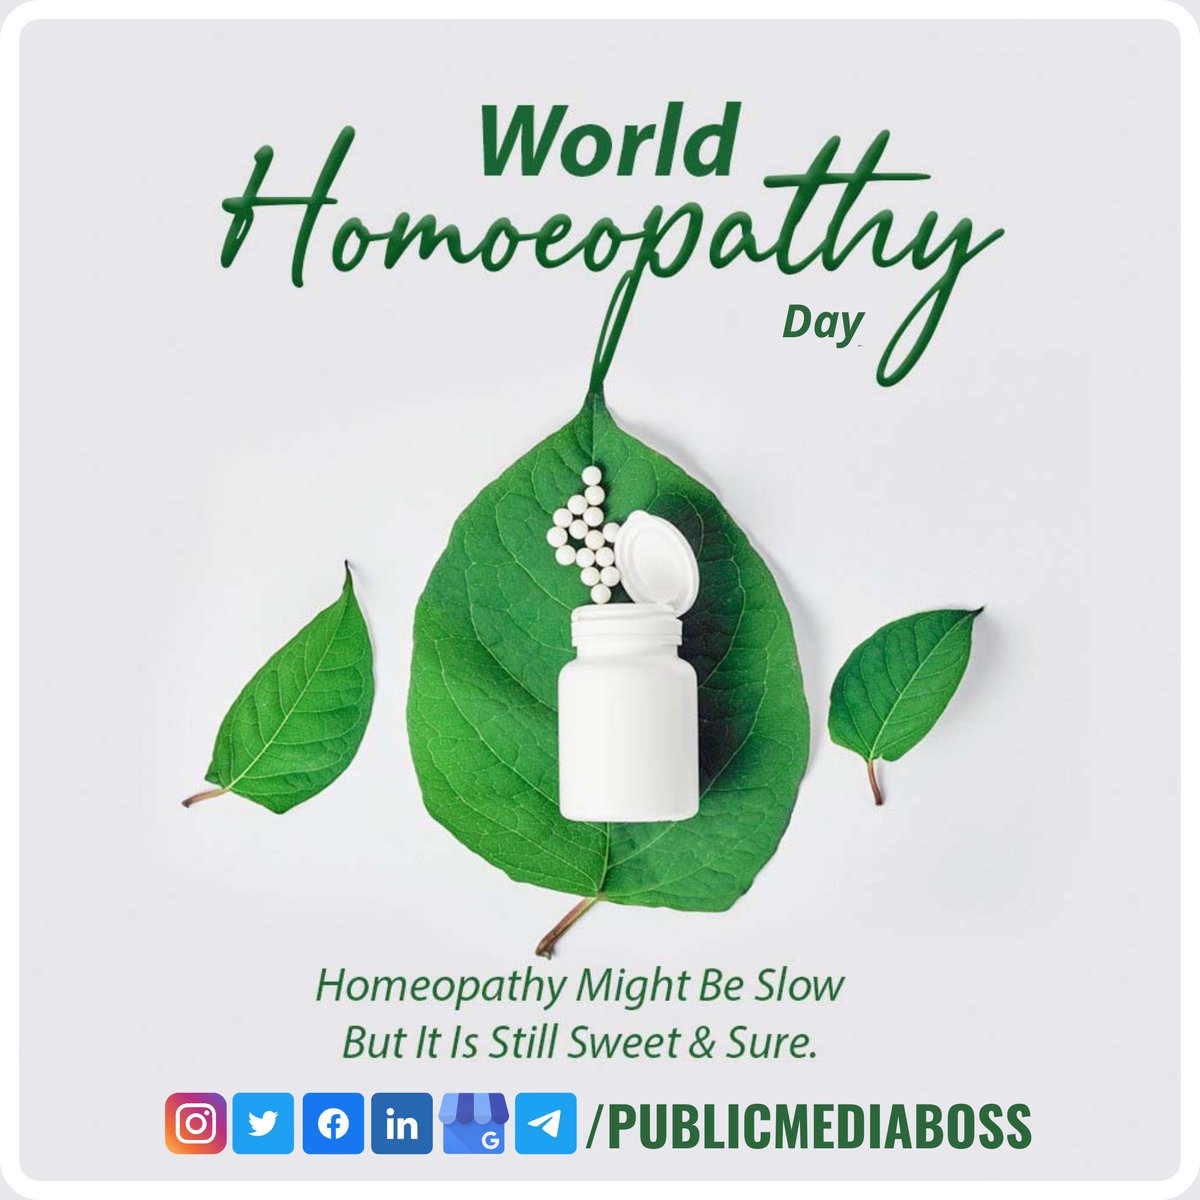 World Homeopathy Day 2022
Homeopathy Might be Slow, But it is still Sweet & Sure.
#WorldHomeopathyDay  #HomeopathyDay
#PMB #PublicMediaBoss #DigitalMarketingAgency #DigitalMarketing #SocialMedia #WebDesigning  #WebDevelopment #Graphics #GraphicsDesigning